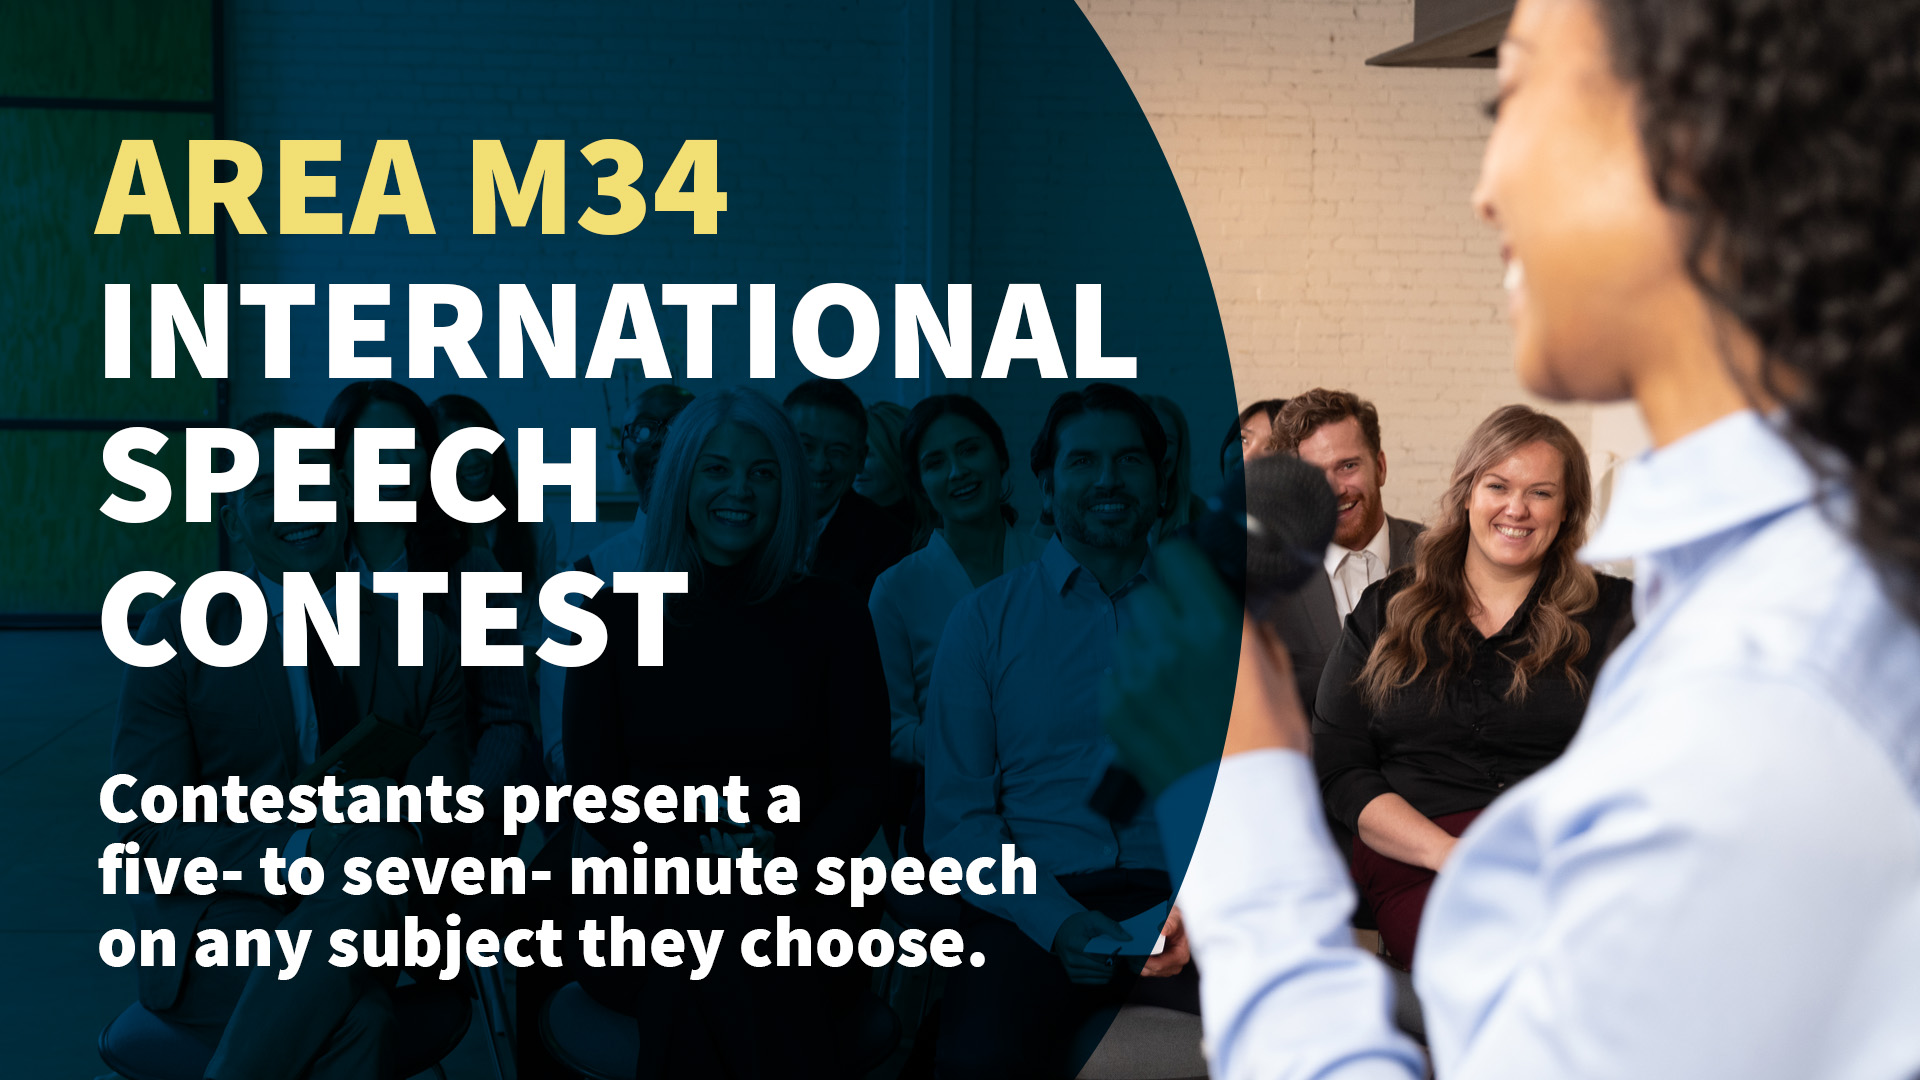 Area 34 International Speech Contest